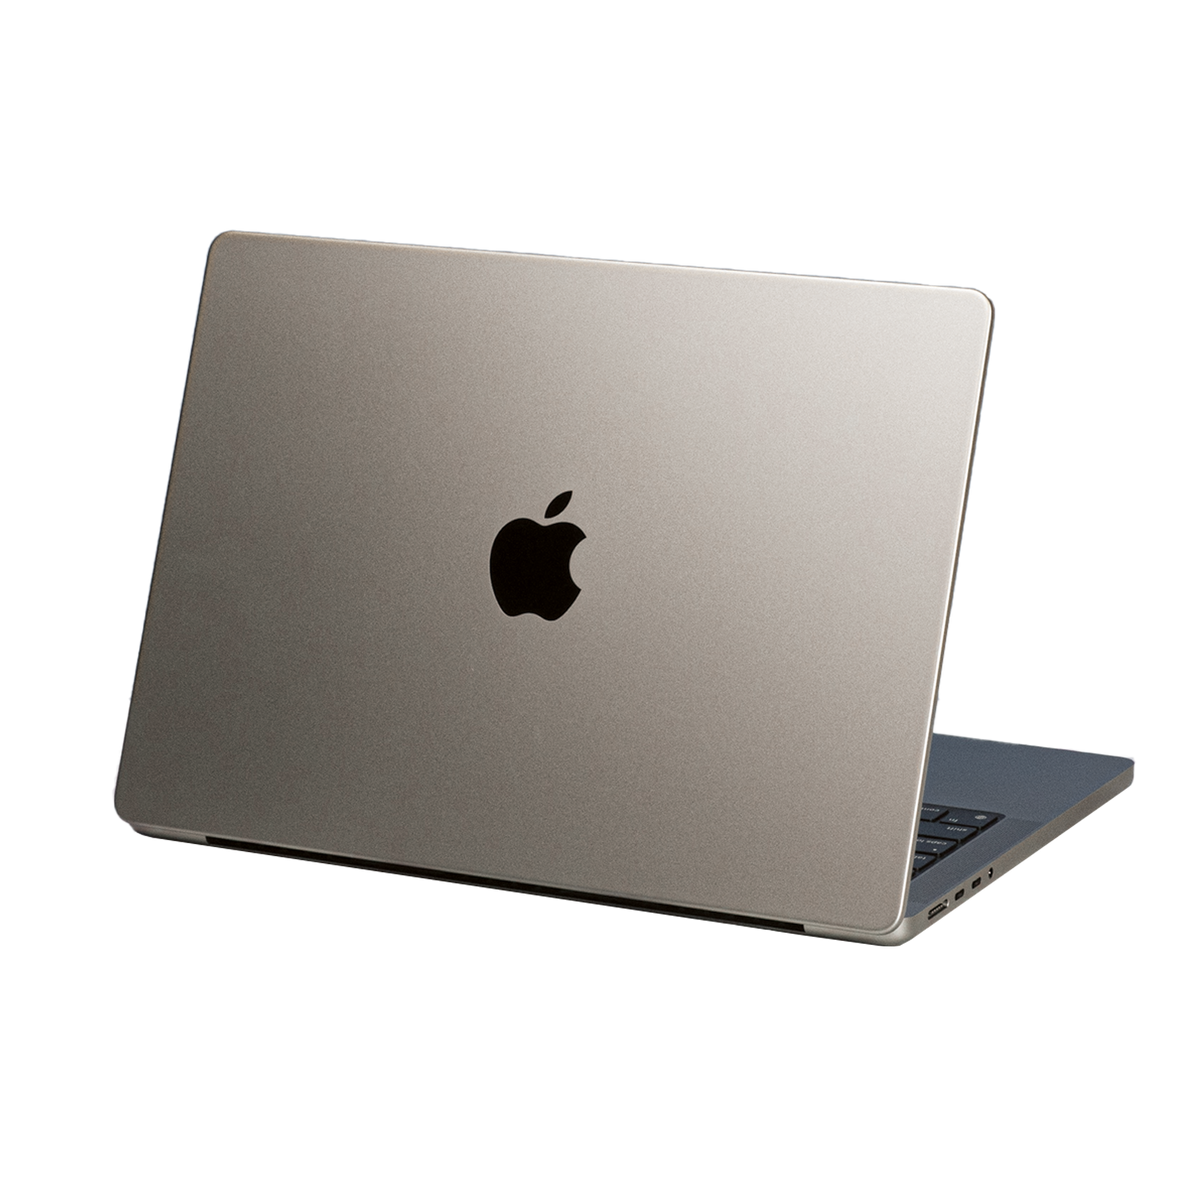 Snake in Roses 2021 MacBook Pro 16 Black Skin Print MacBook 